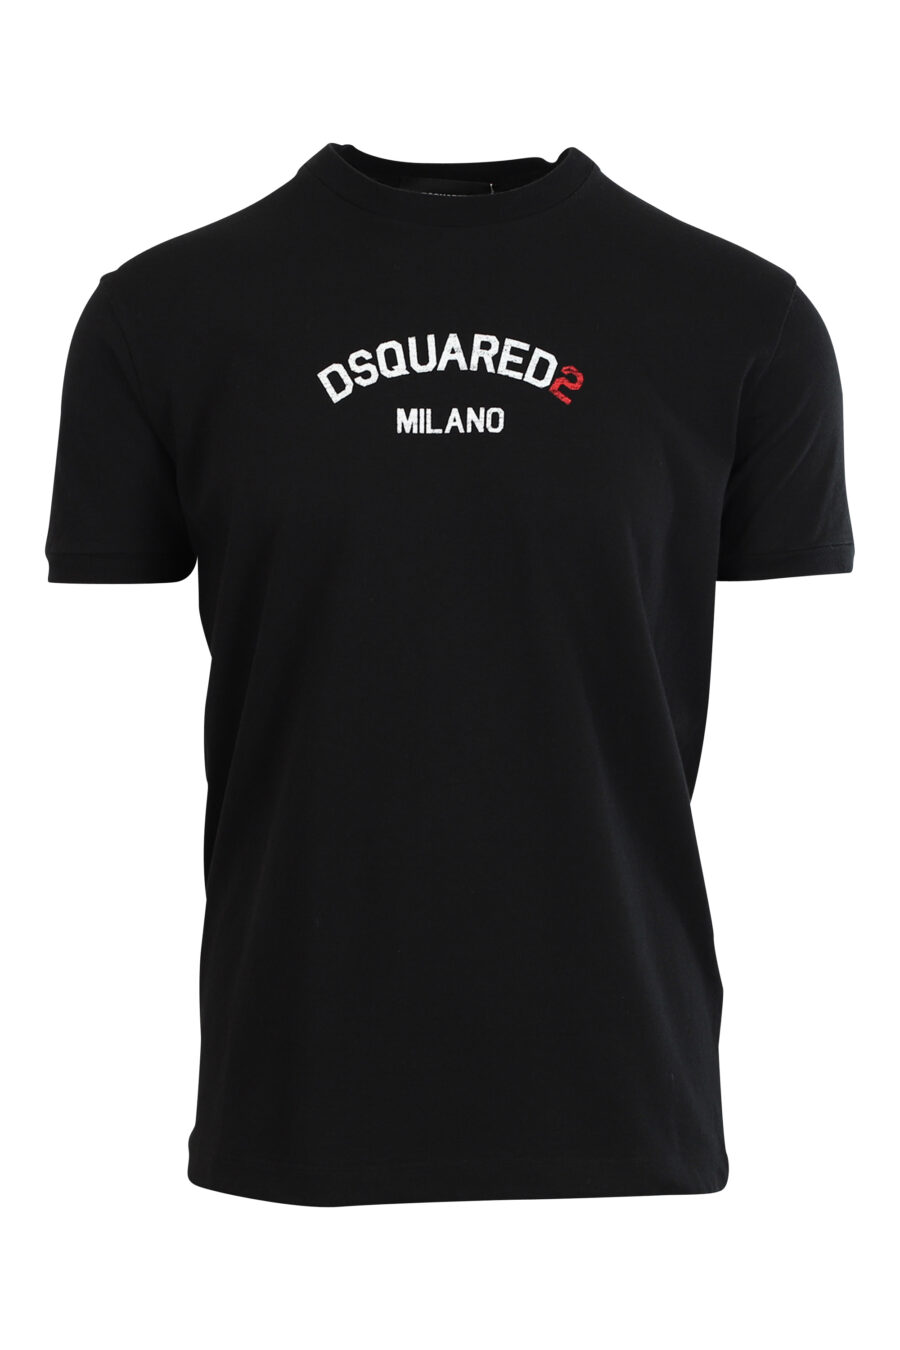 T-shirt preta com minilogo "dsquared2 milano" - 8058049836090